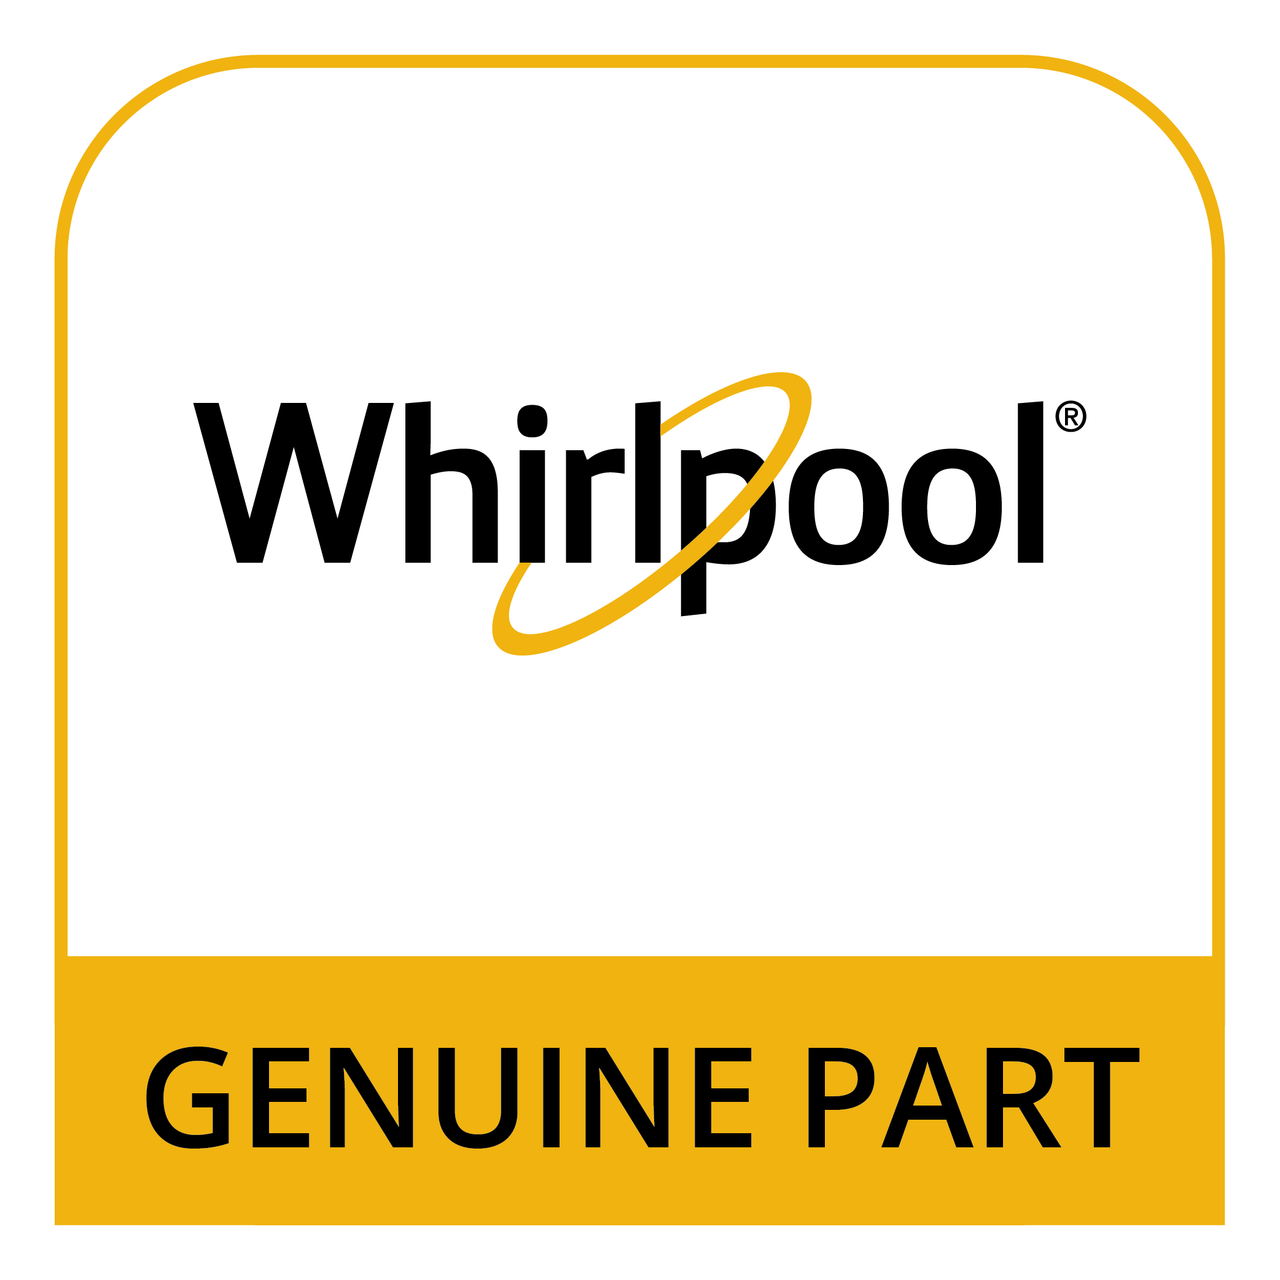 Whirlpool W10398001 - Module *Non-Wise* - Genuine Part